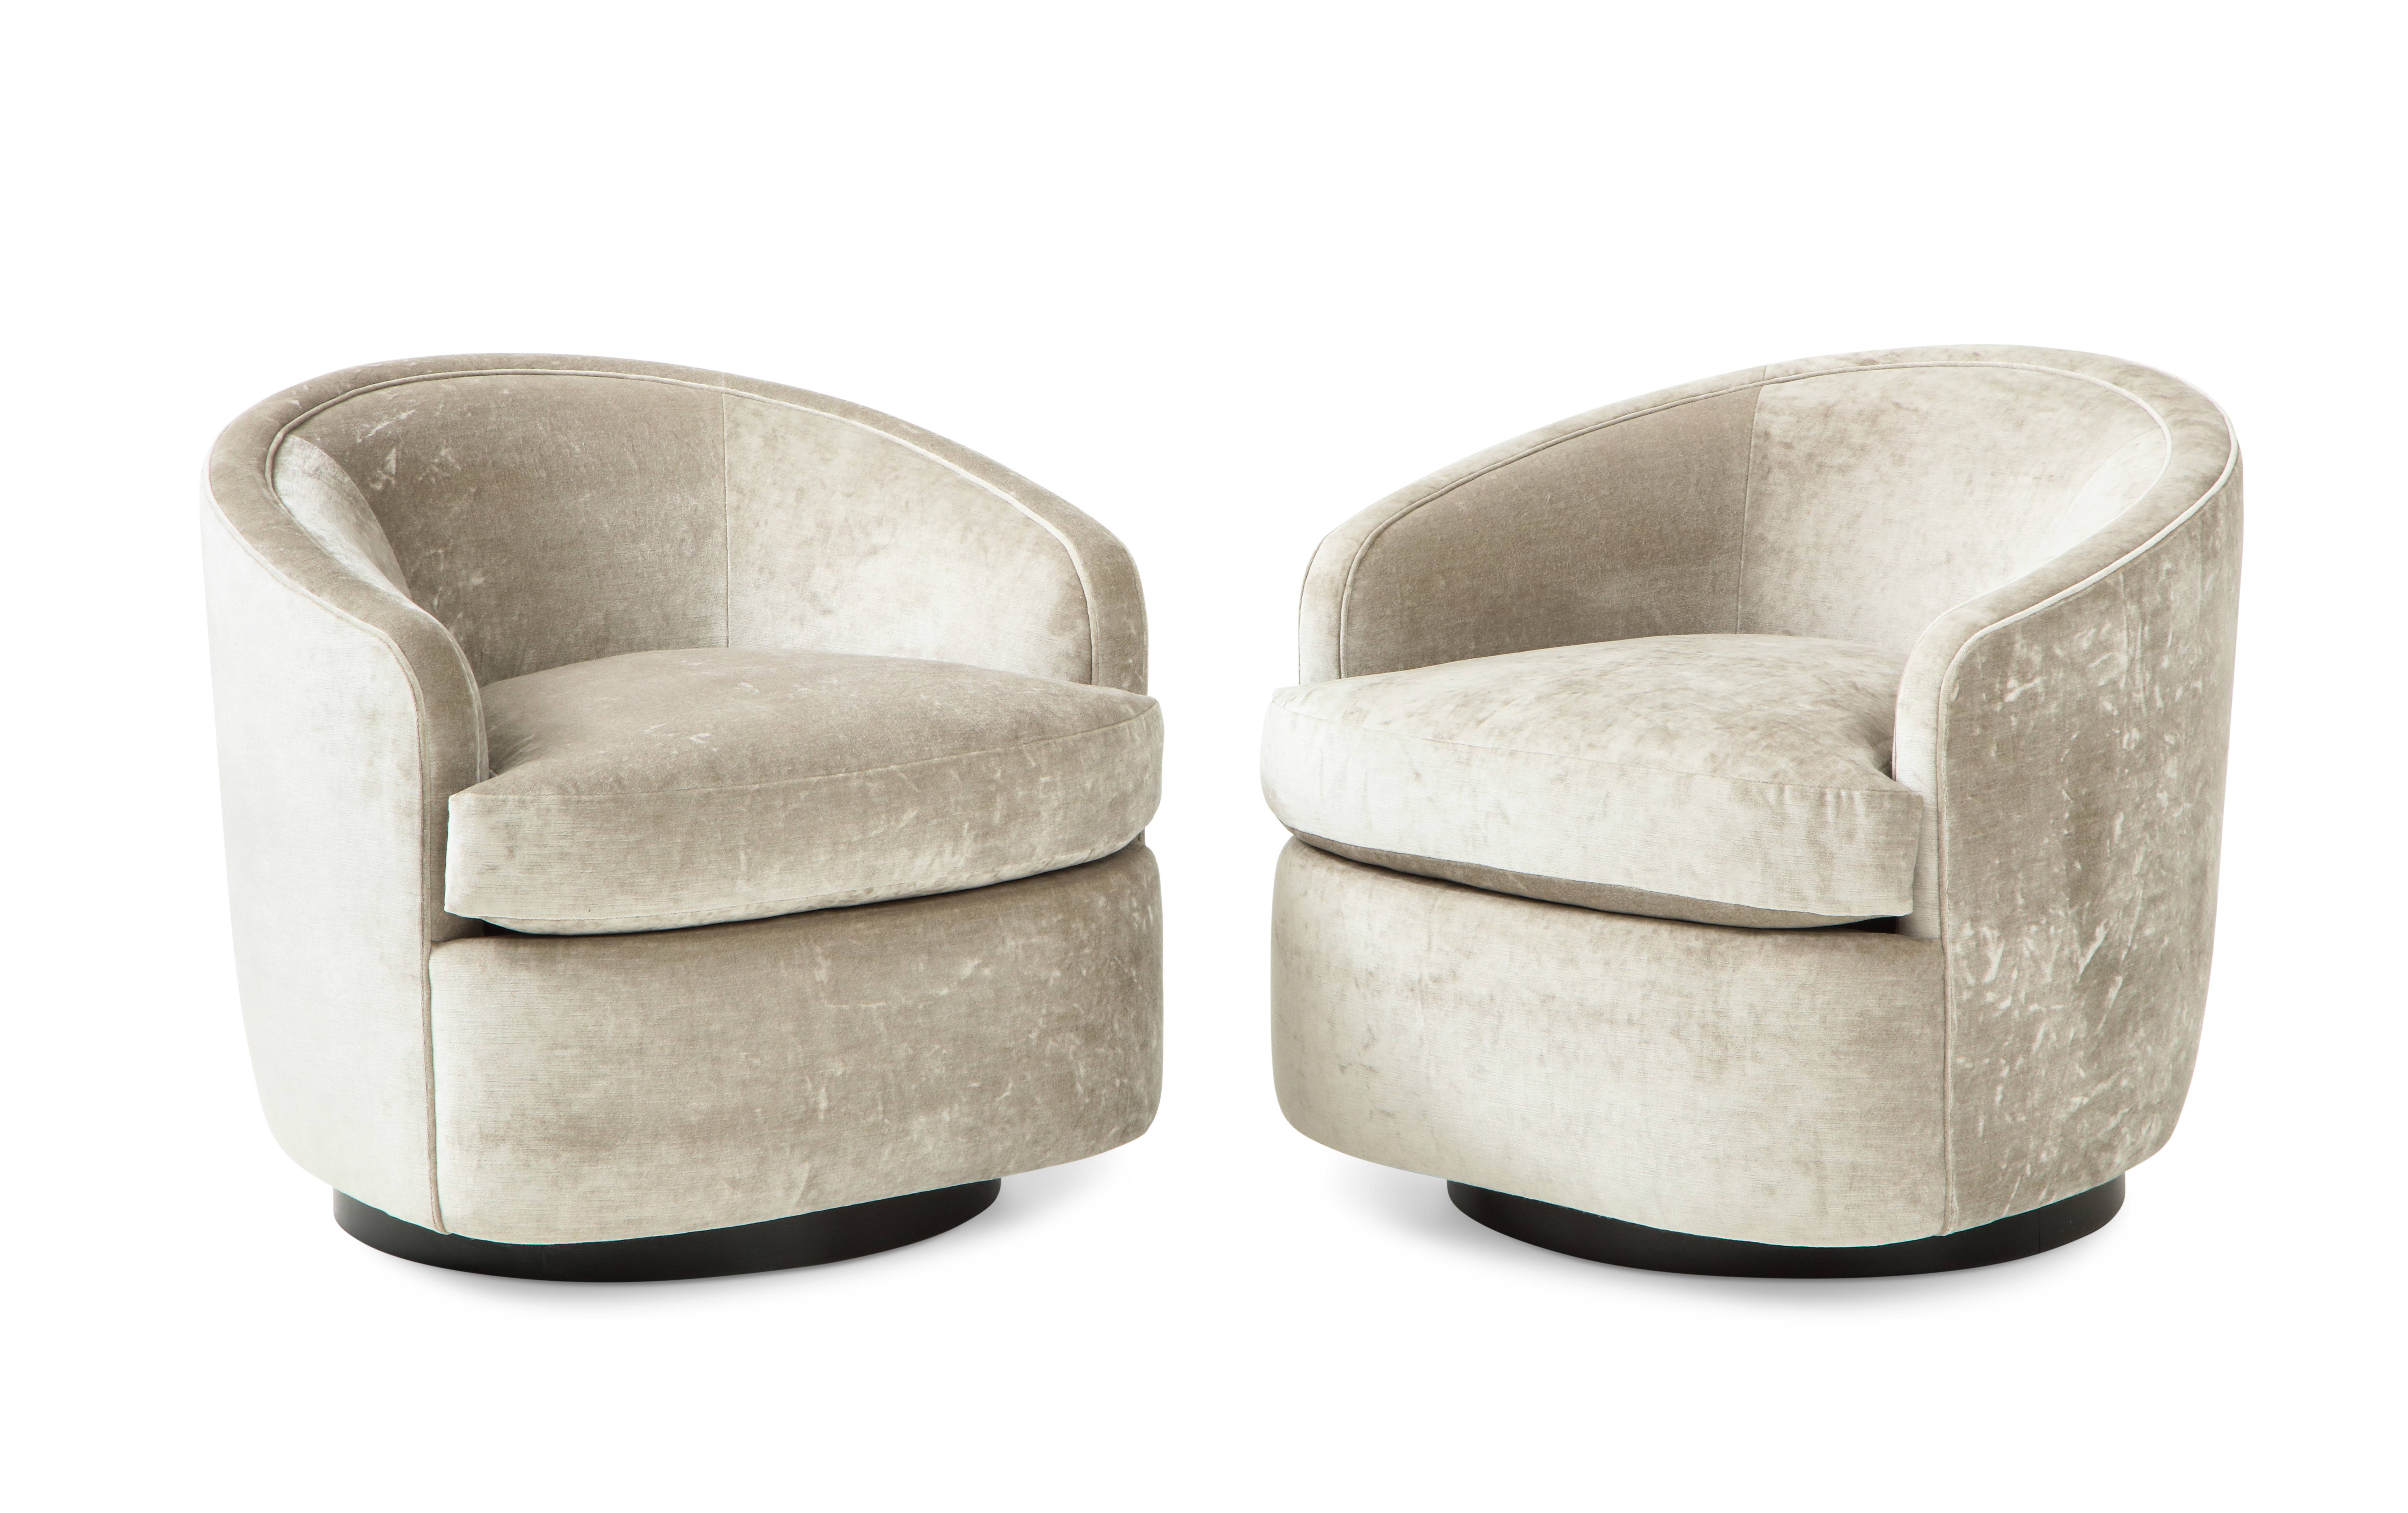 Pair of Milo Baughman style swivel chairs